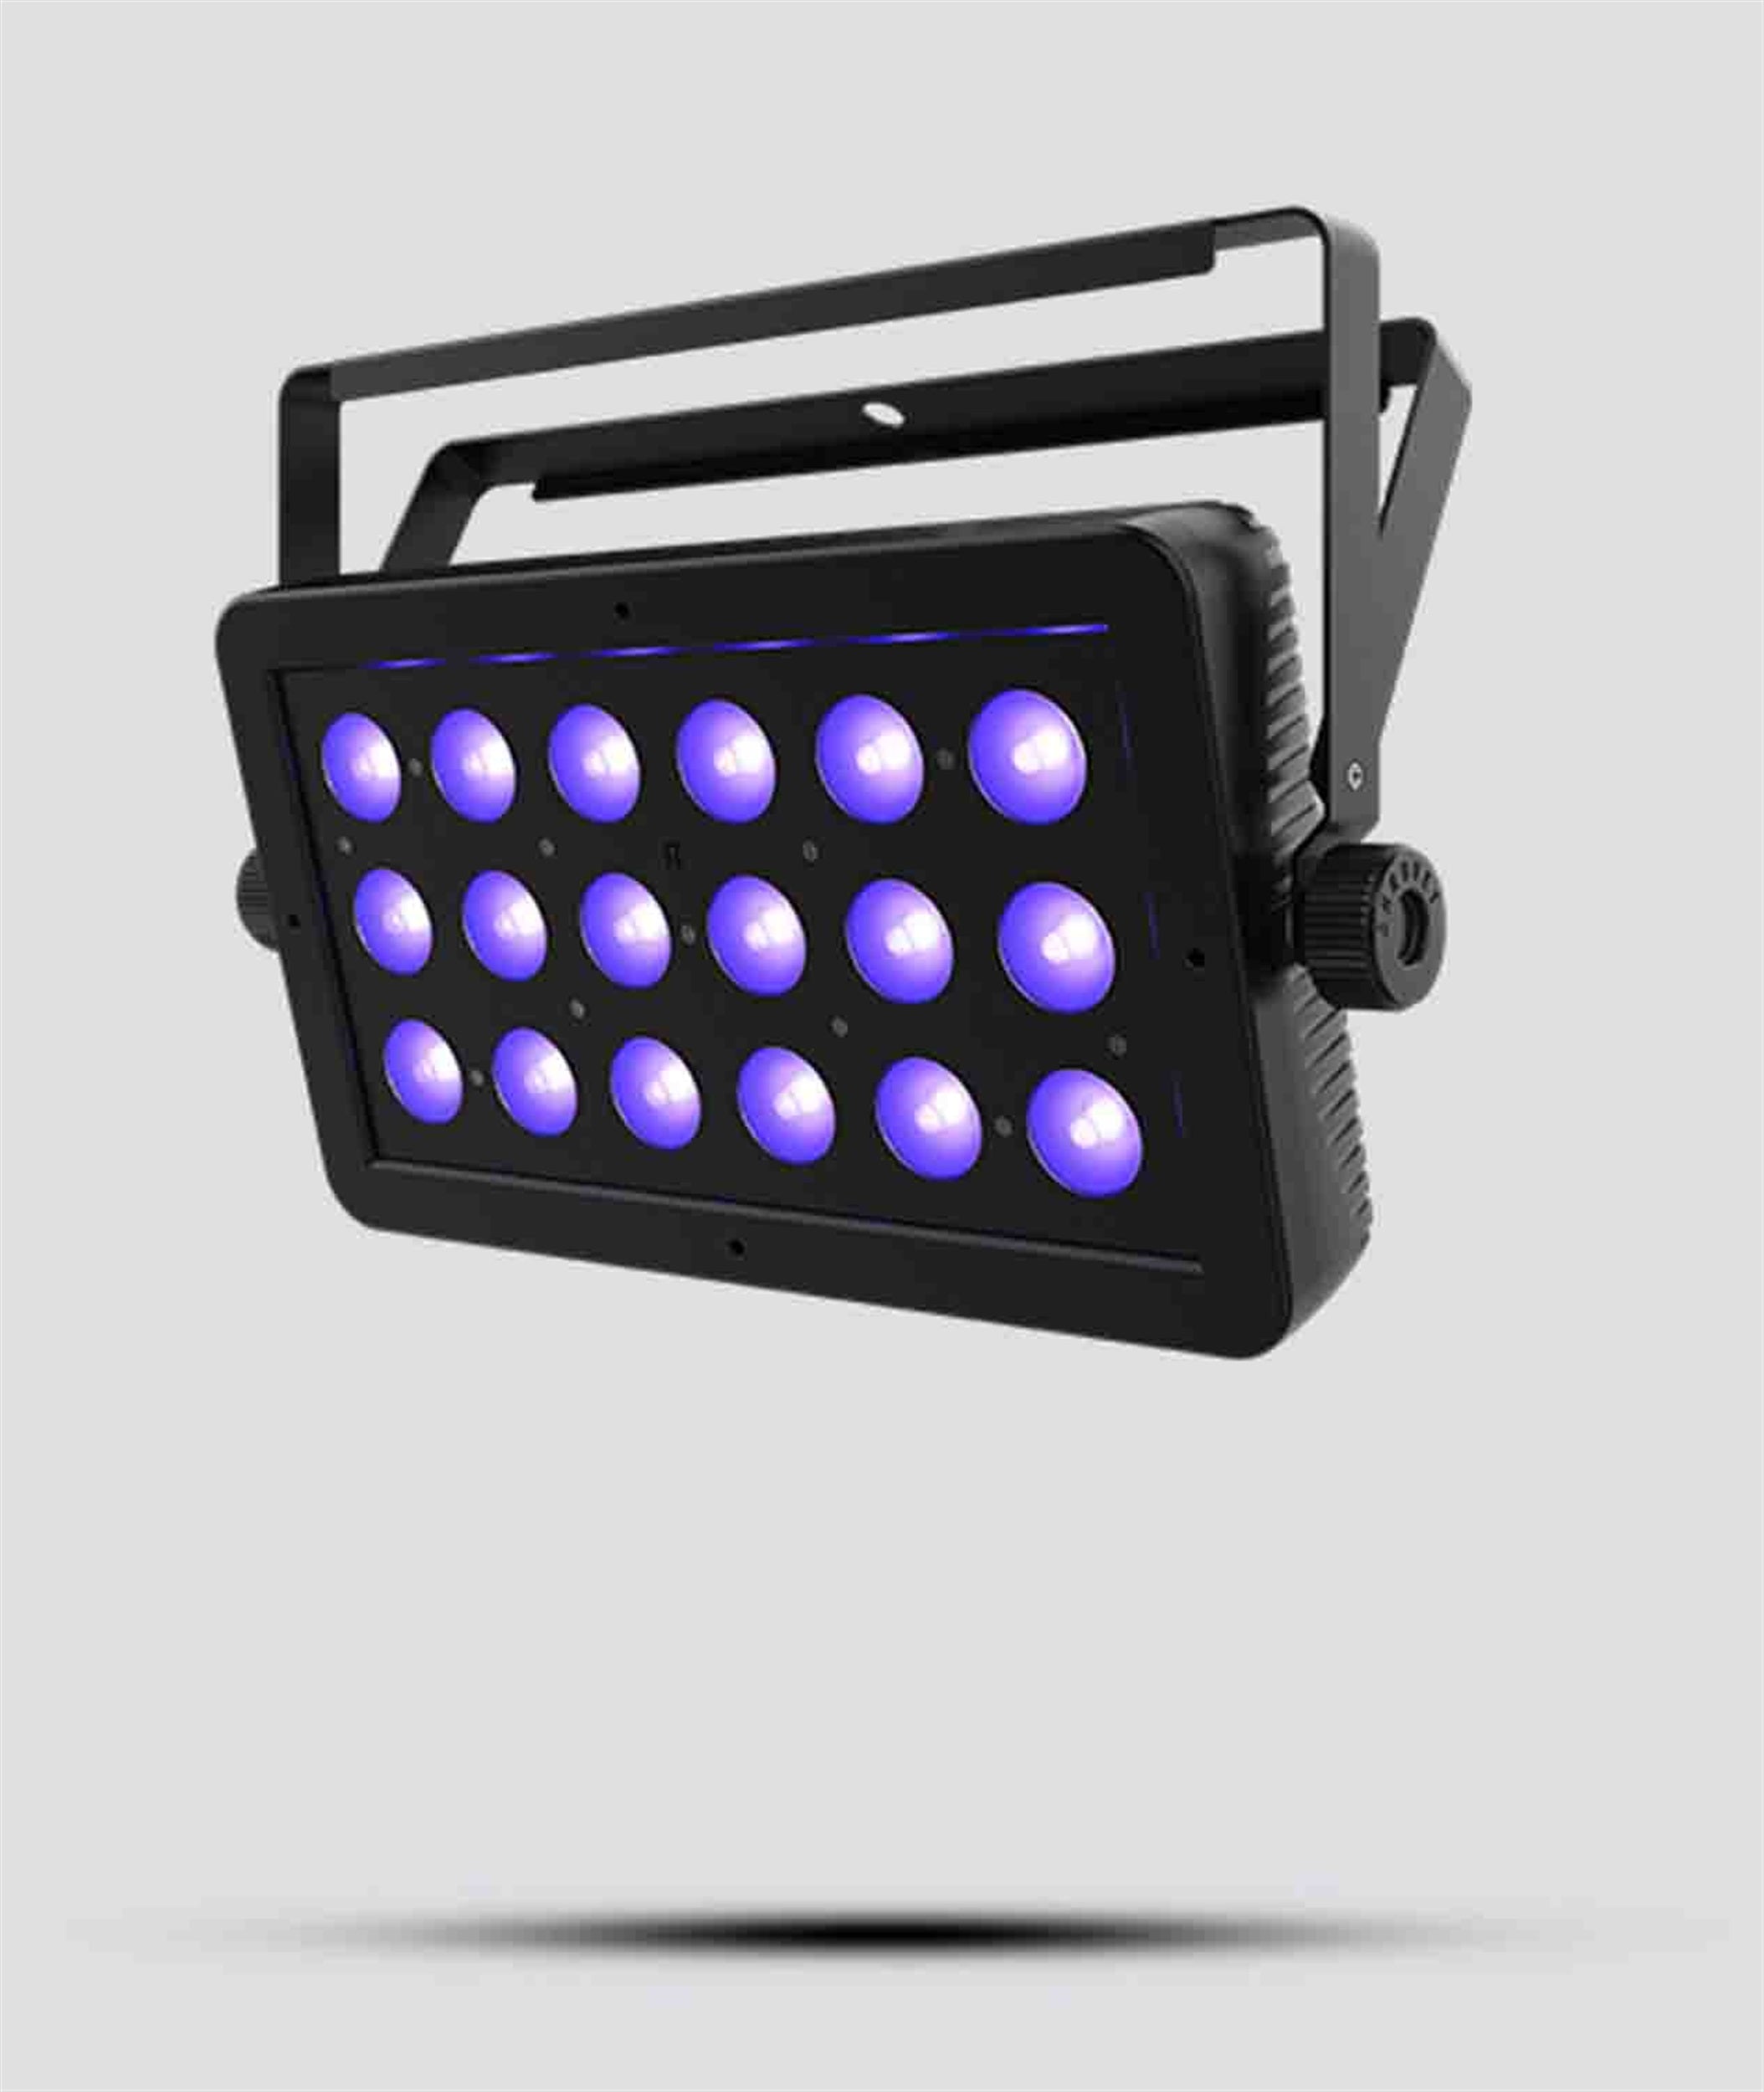 B-Stock: Chauvet LED Shadow 2 ILS, Blacklight Panel Wash with ILS - Hollywood DJ